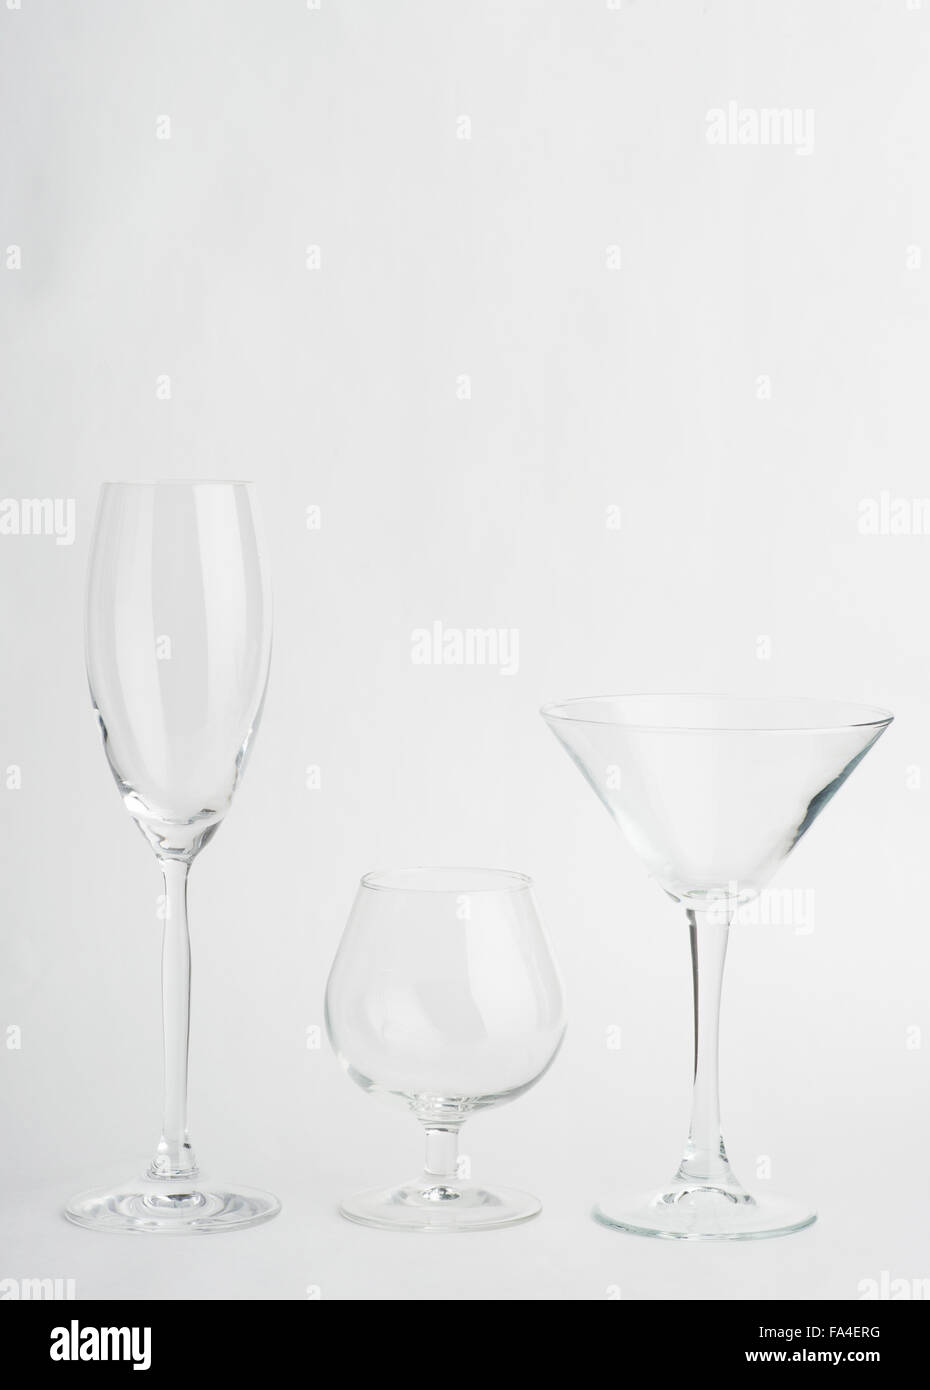 Set of glasses for alcoholic drinks on light background Stock Photo